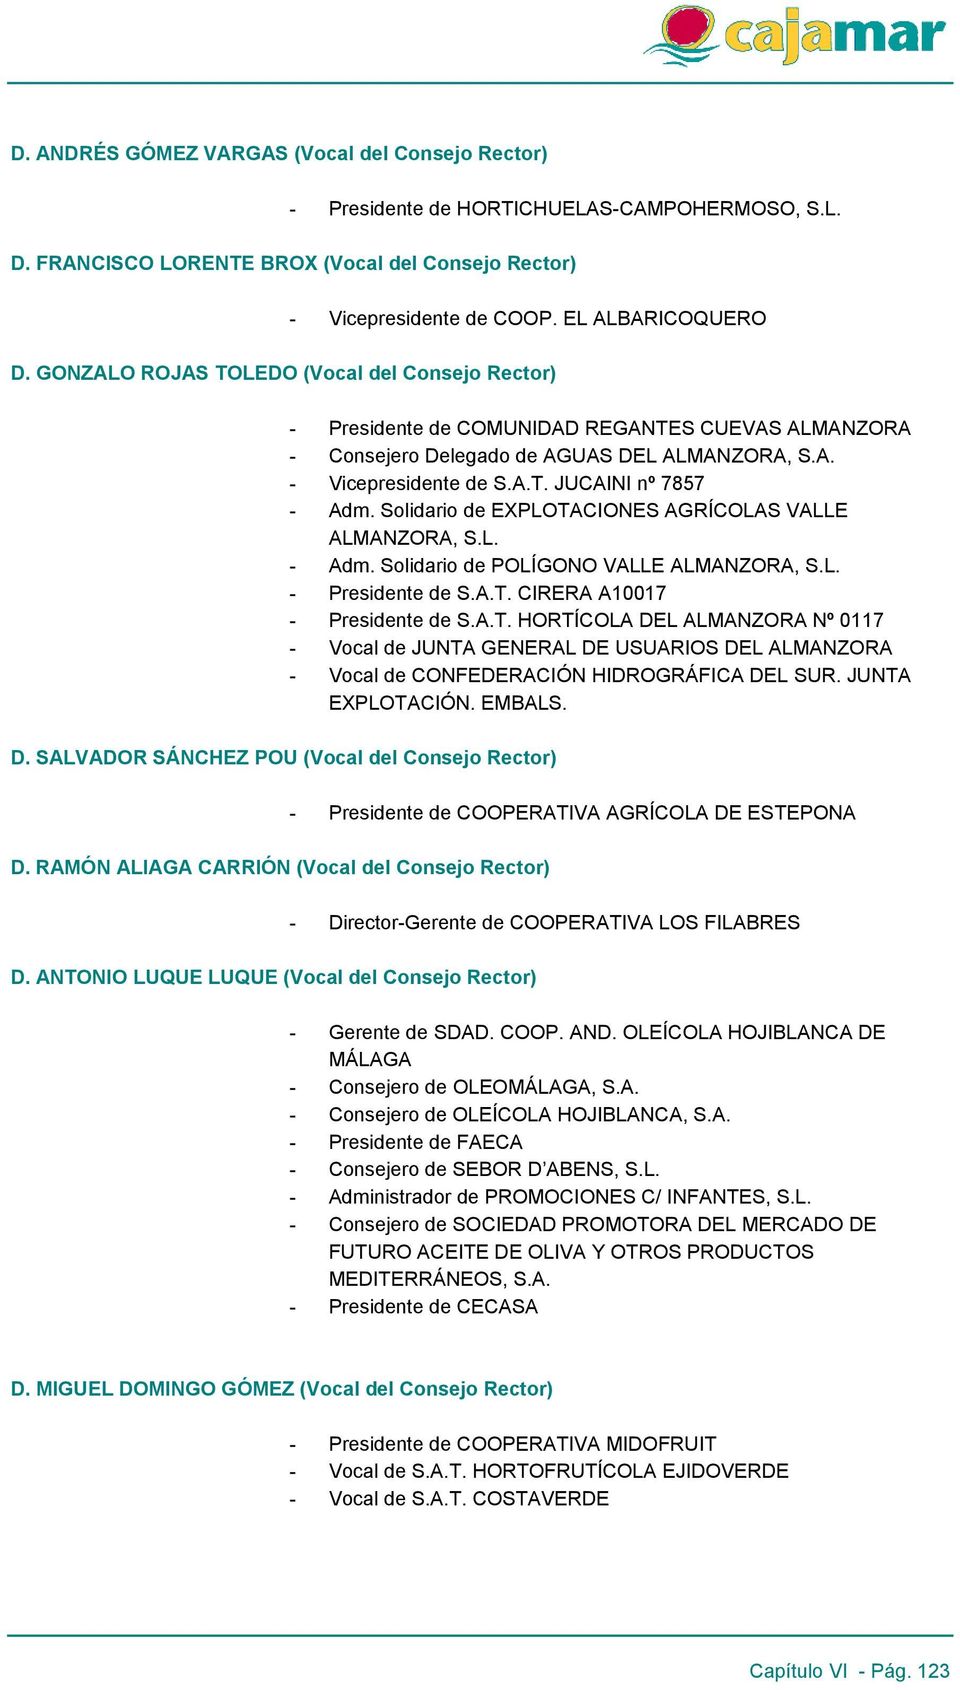 Solidario de EXPLOTACIONES AGRÍCOLAS VALLE ALMANZORA, S.L. - Adm. Solidario de POLÍGONO VALLE ALMANZORA, S.L. - Presidente de S.A.T. CIRERA A10017 - Presidente de S.A.T. HORTÍCOLA DEL ALMANZORA Nº 0117 - Vocal de JUNTA GENERAL DE USUARIOS DEL ALMANZORA - Vocal de CONFEDERACIÓN HIDROGRÁFICA DEL SUR.